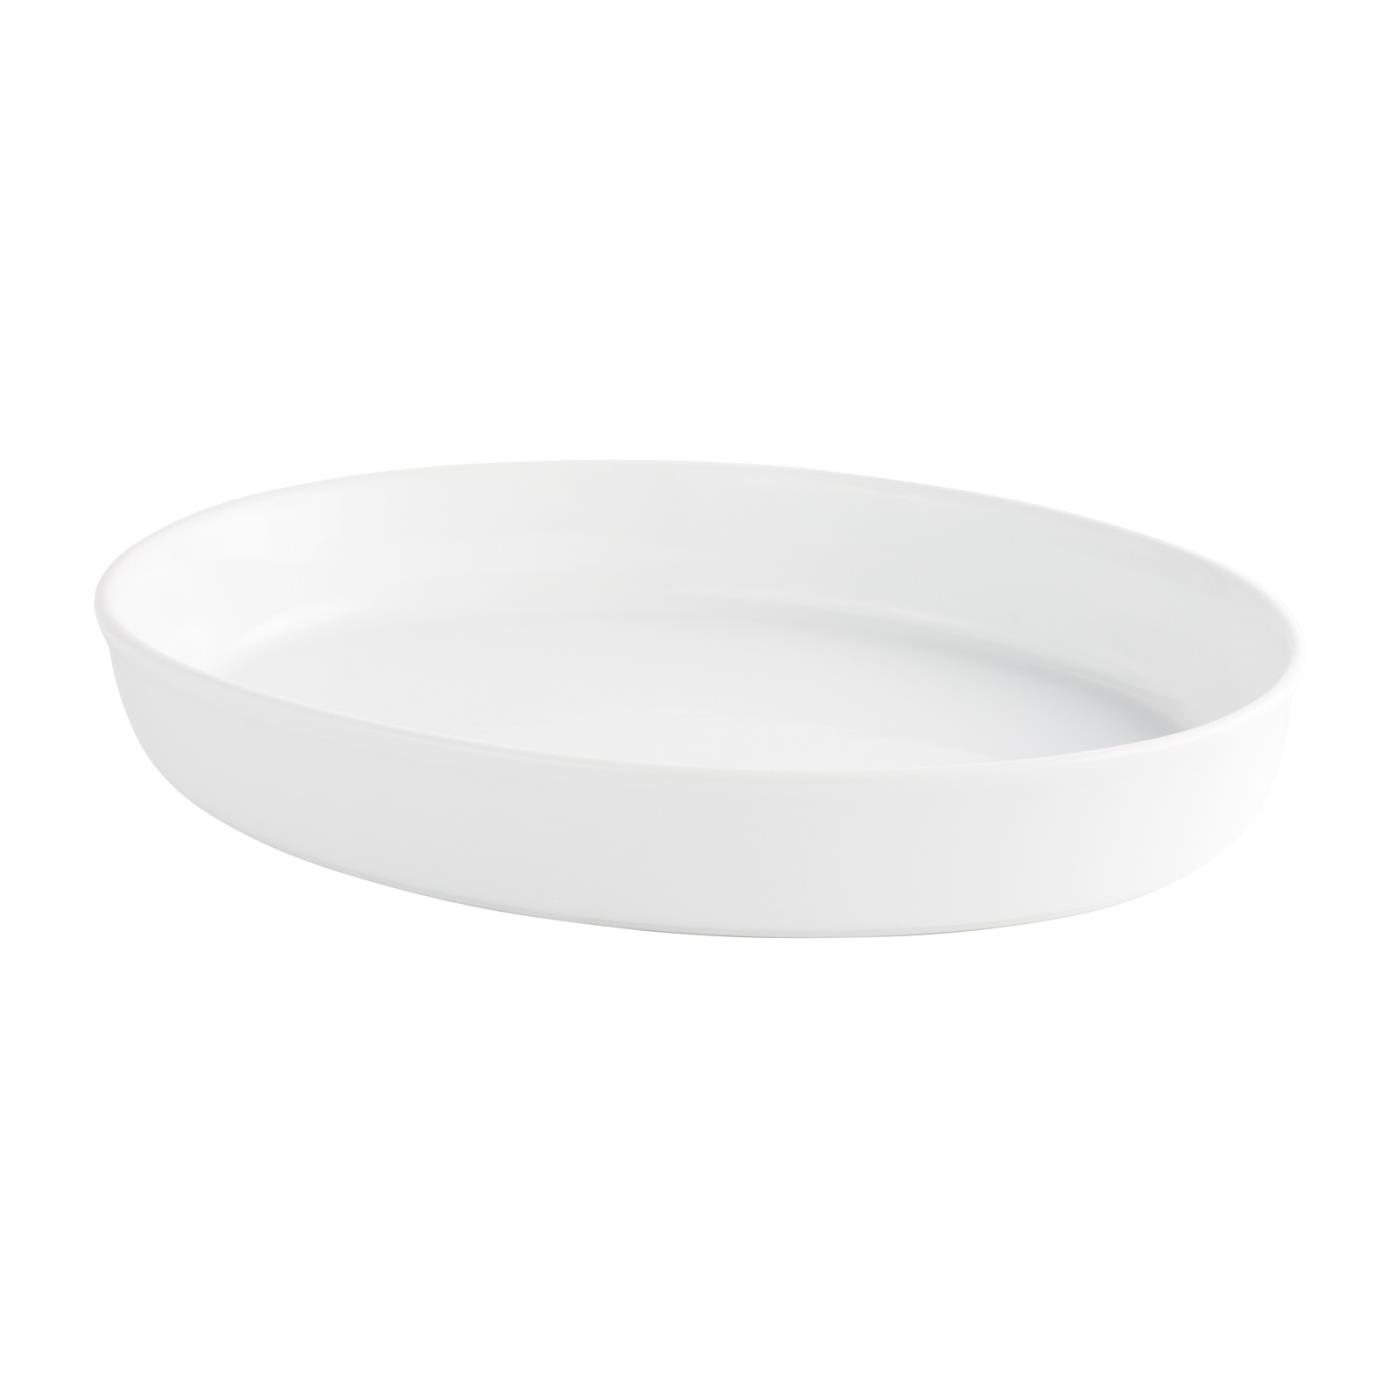 White Ceramic Oval Casserole Dish - 14.75" x 10"